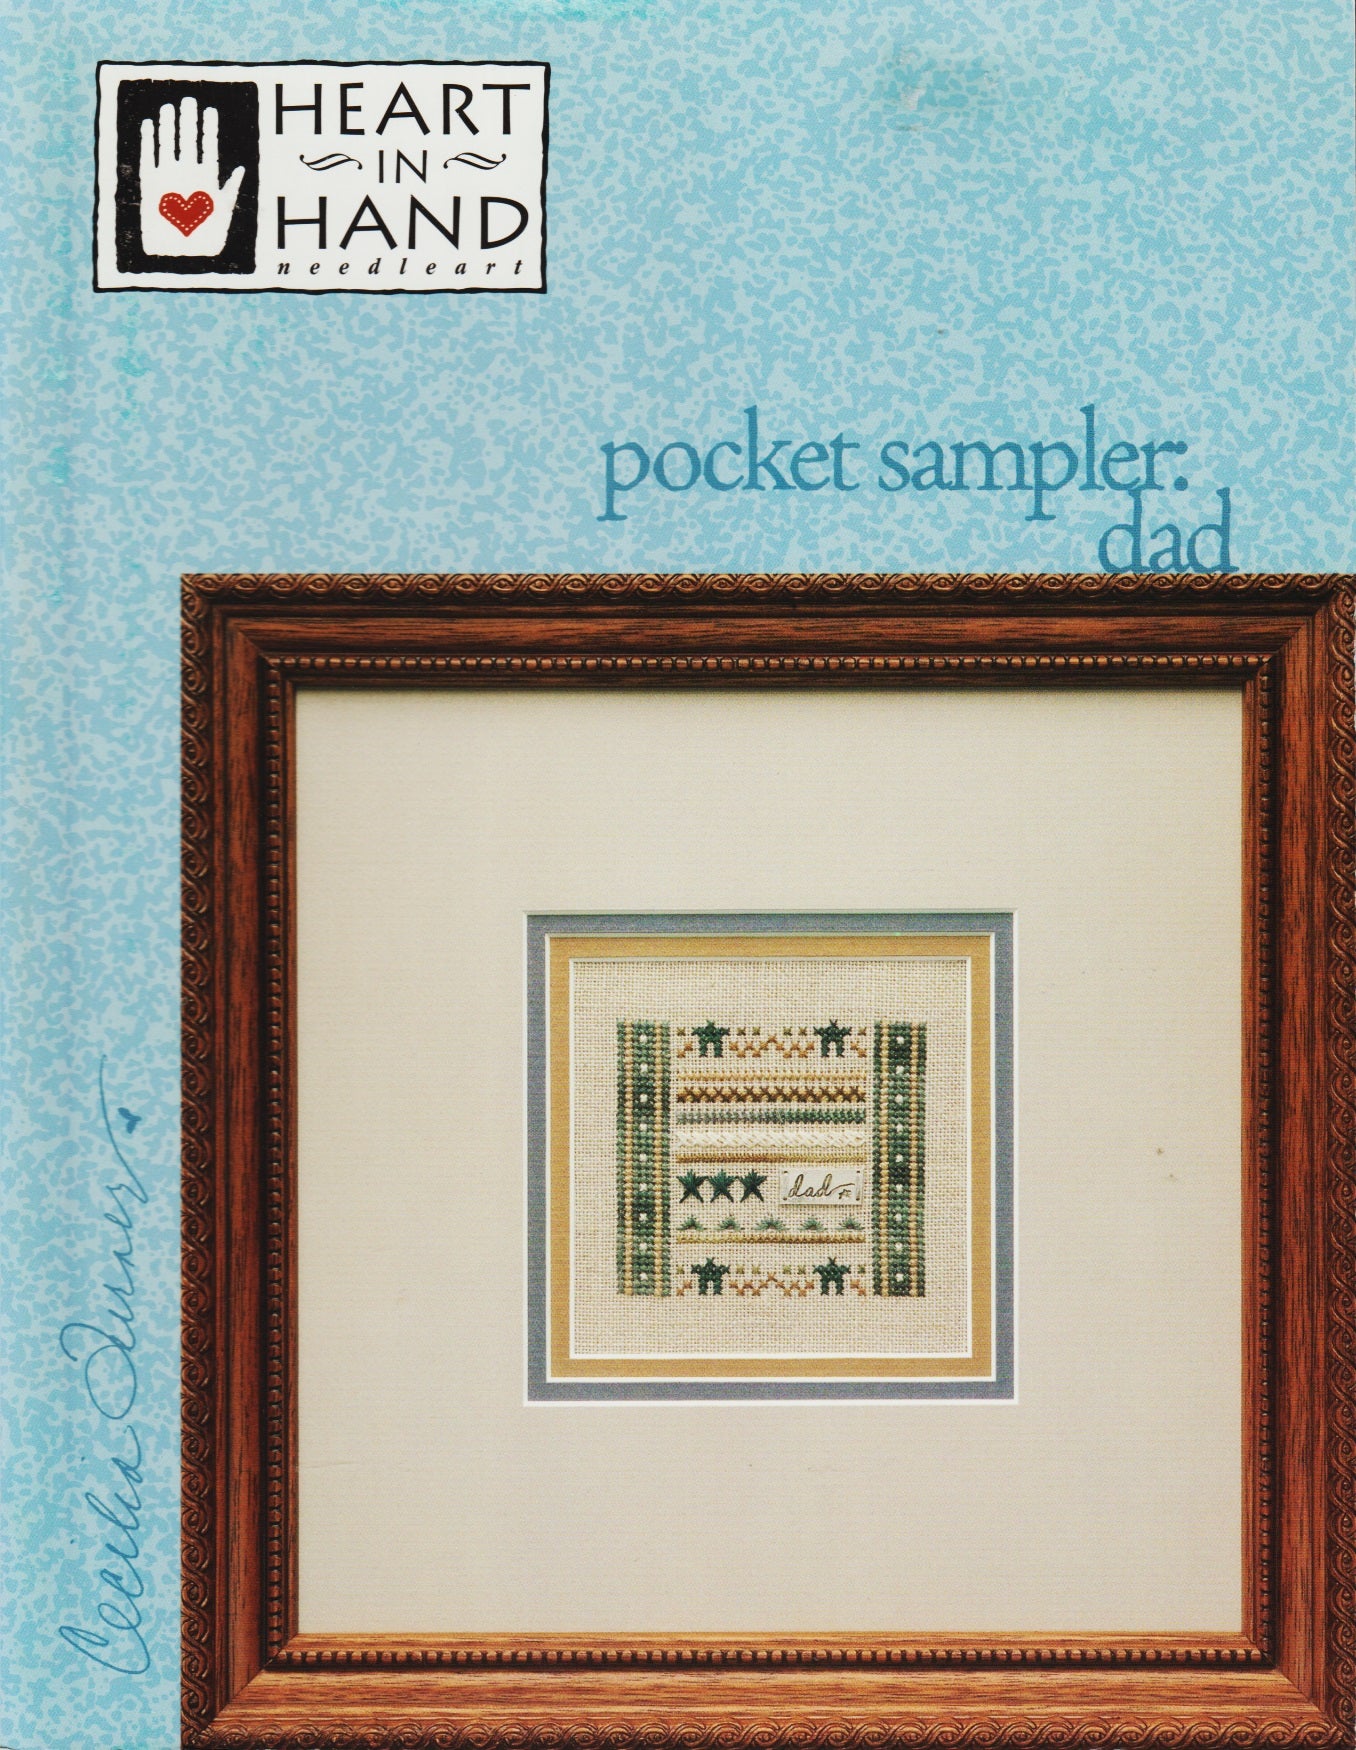 Heart In Hand Pocket Sampler: Dad cross stitch pattern